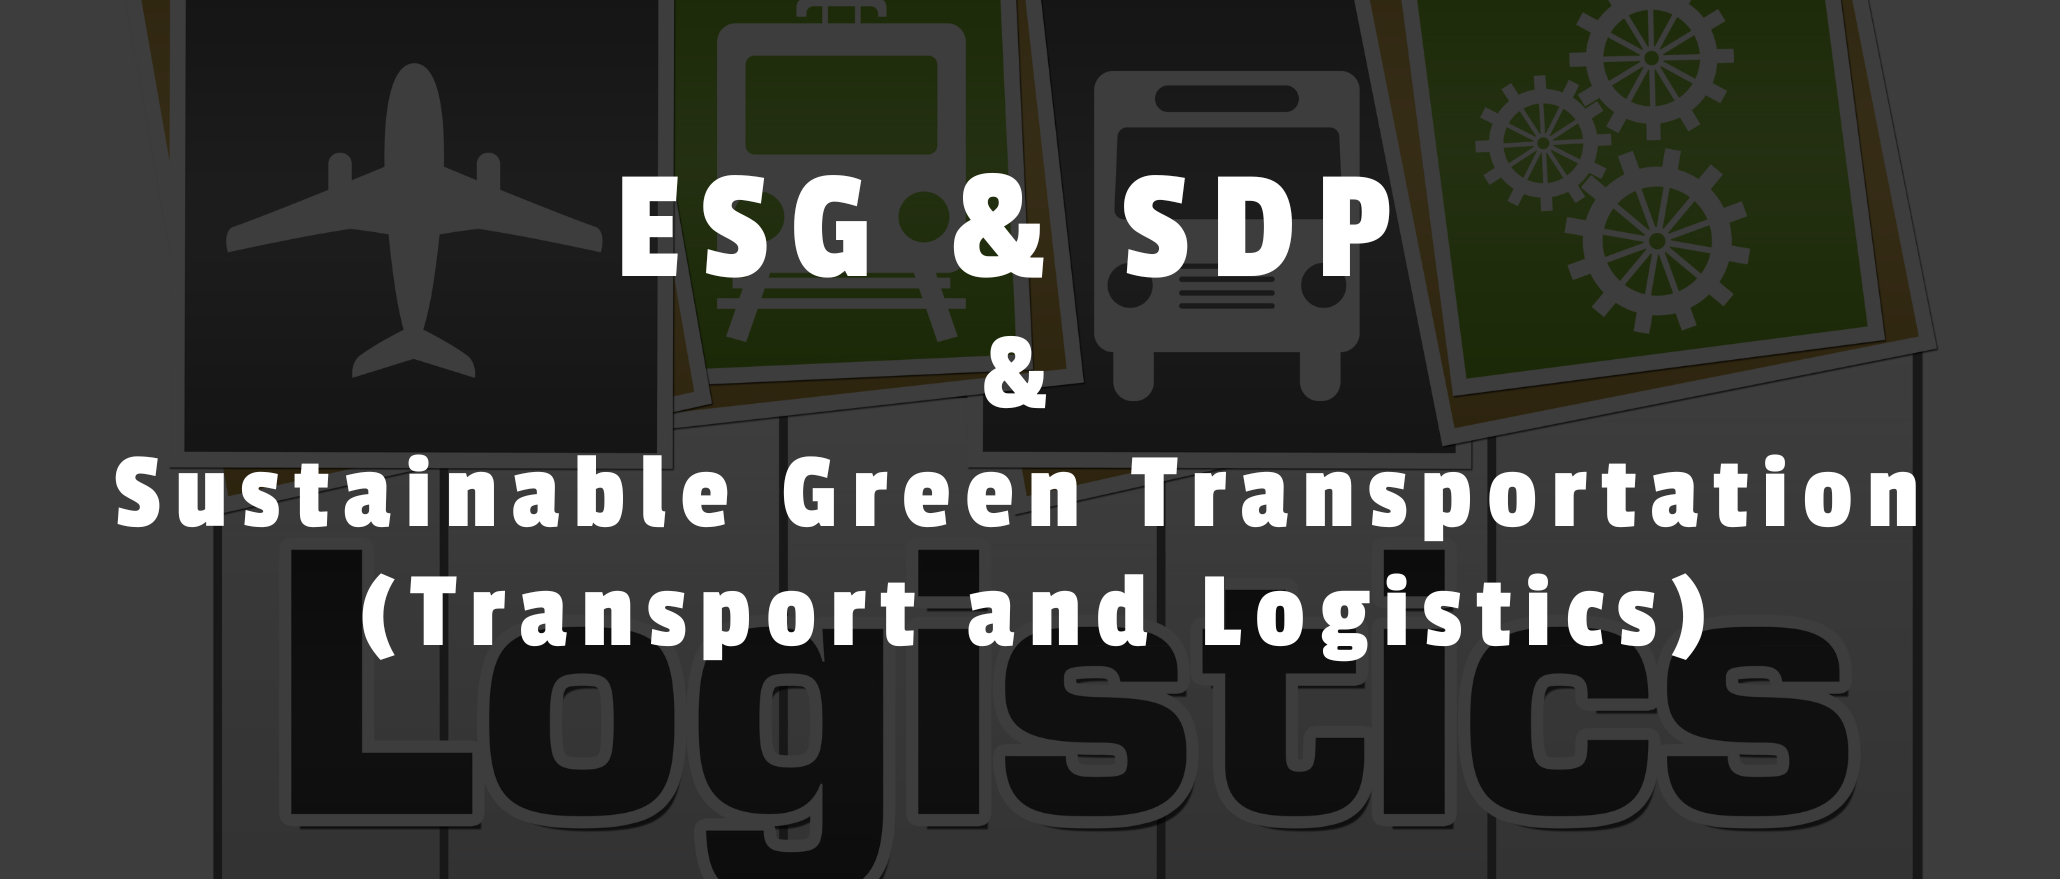 ESG & SDP & Sustainable Green Transportation (Transport and Logistics) 綠色交通